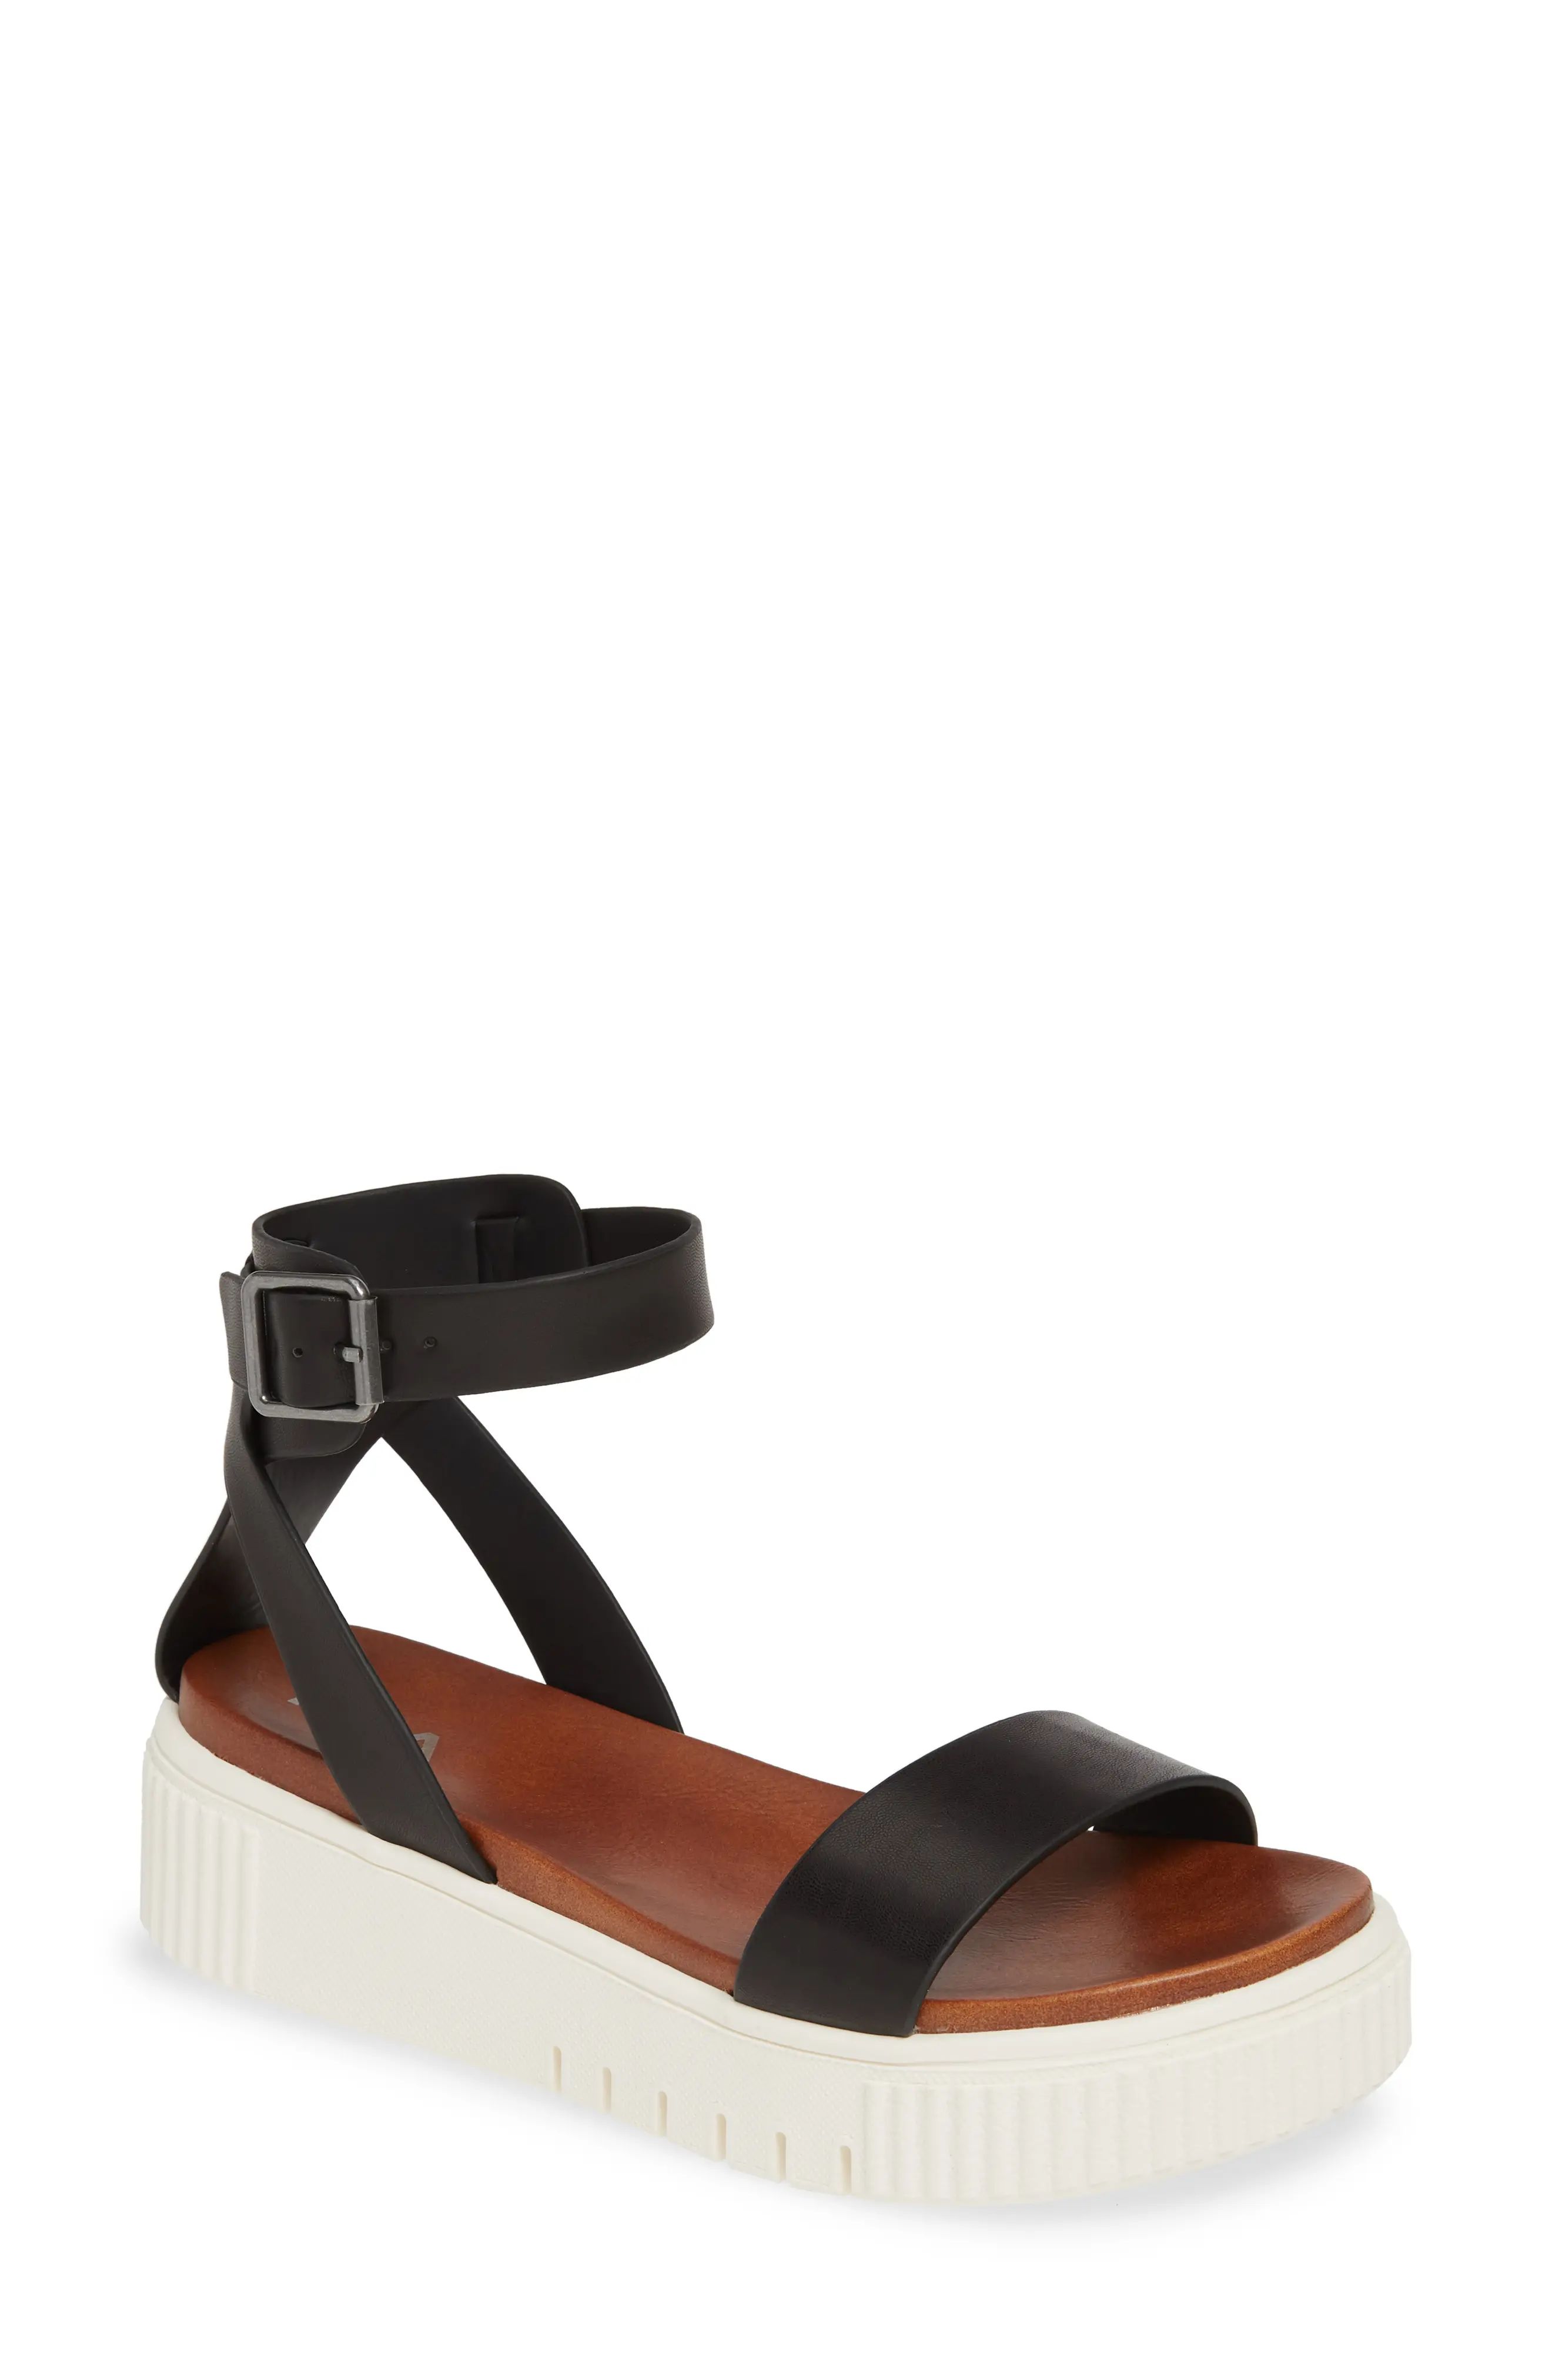 Women's Mia Lunna Platform Ankle Strap Sandal, Size 10 M - Black | Nordstrom